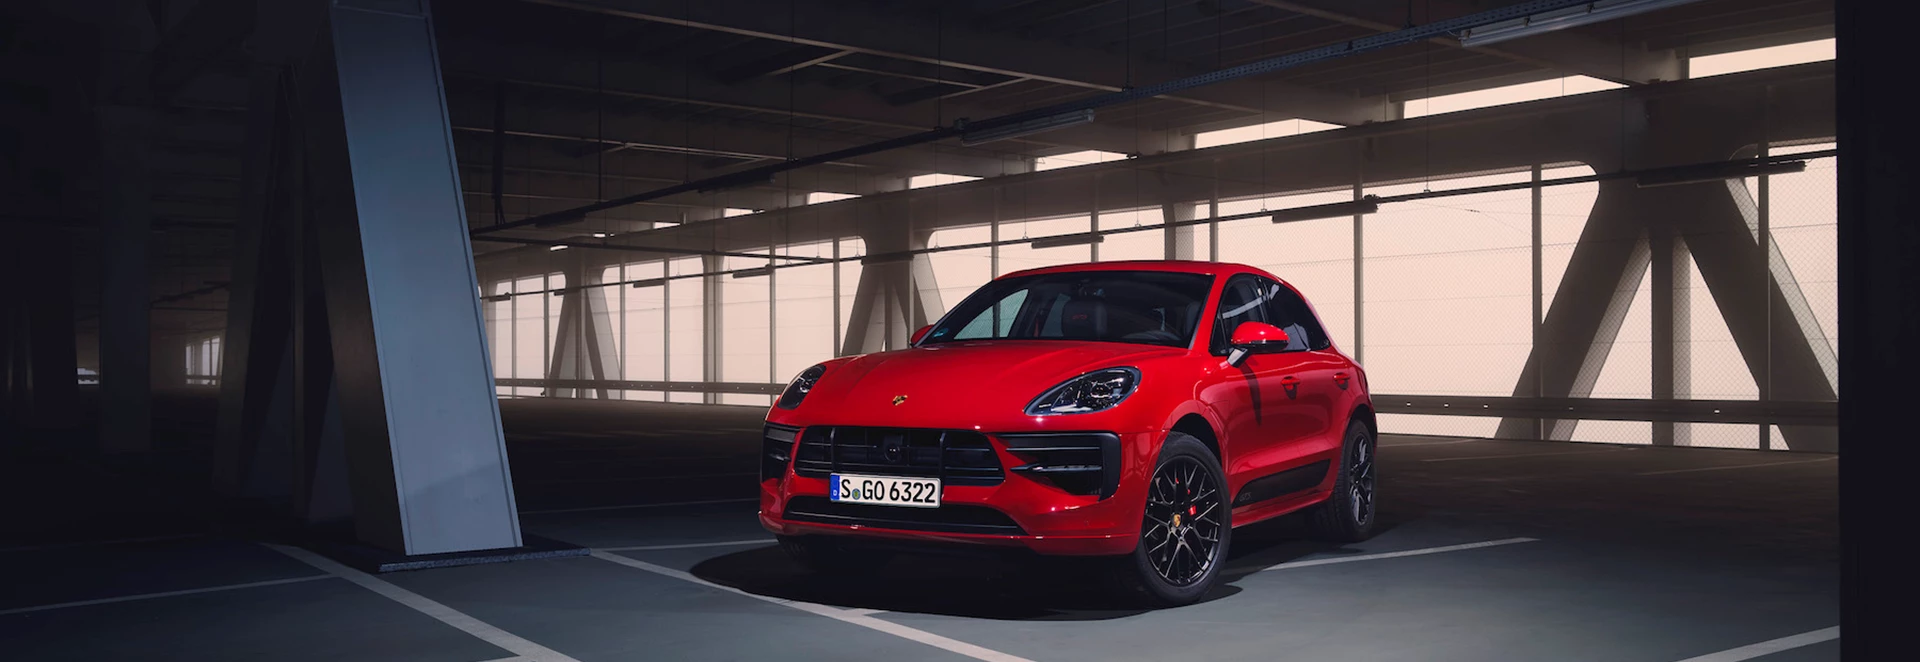 Sporty GTS variant joins Porsche Macan SUV range 